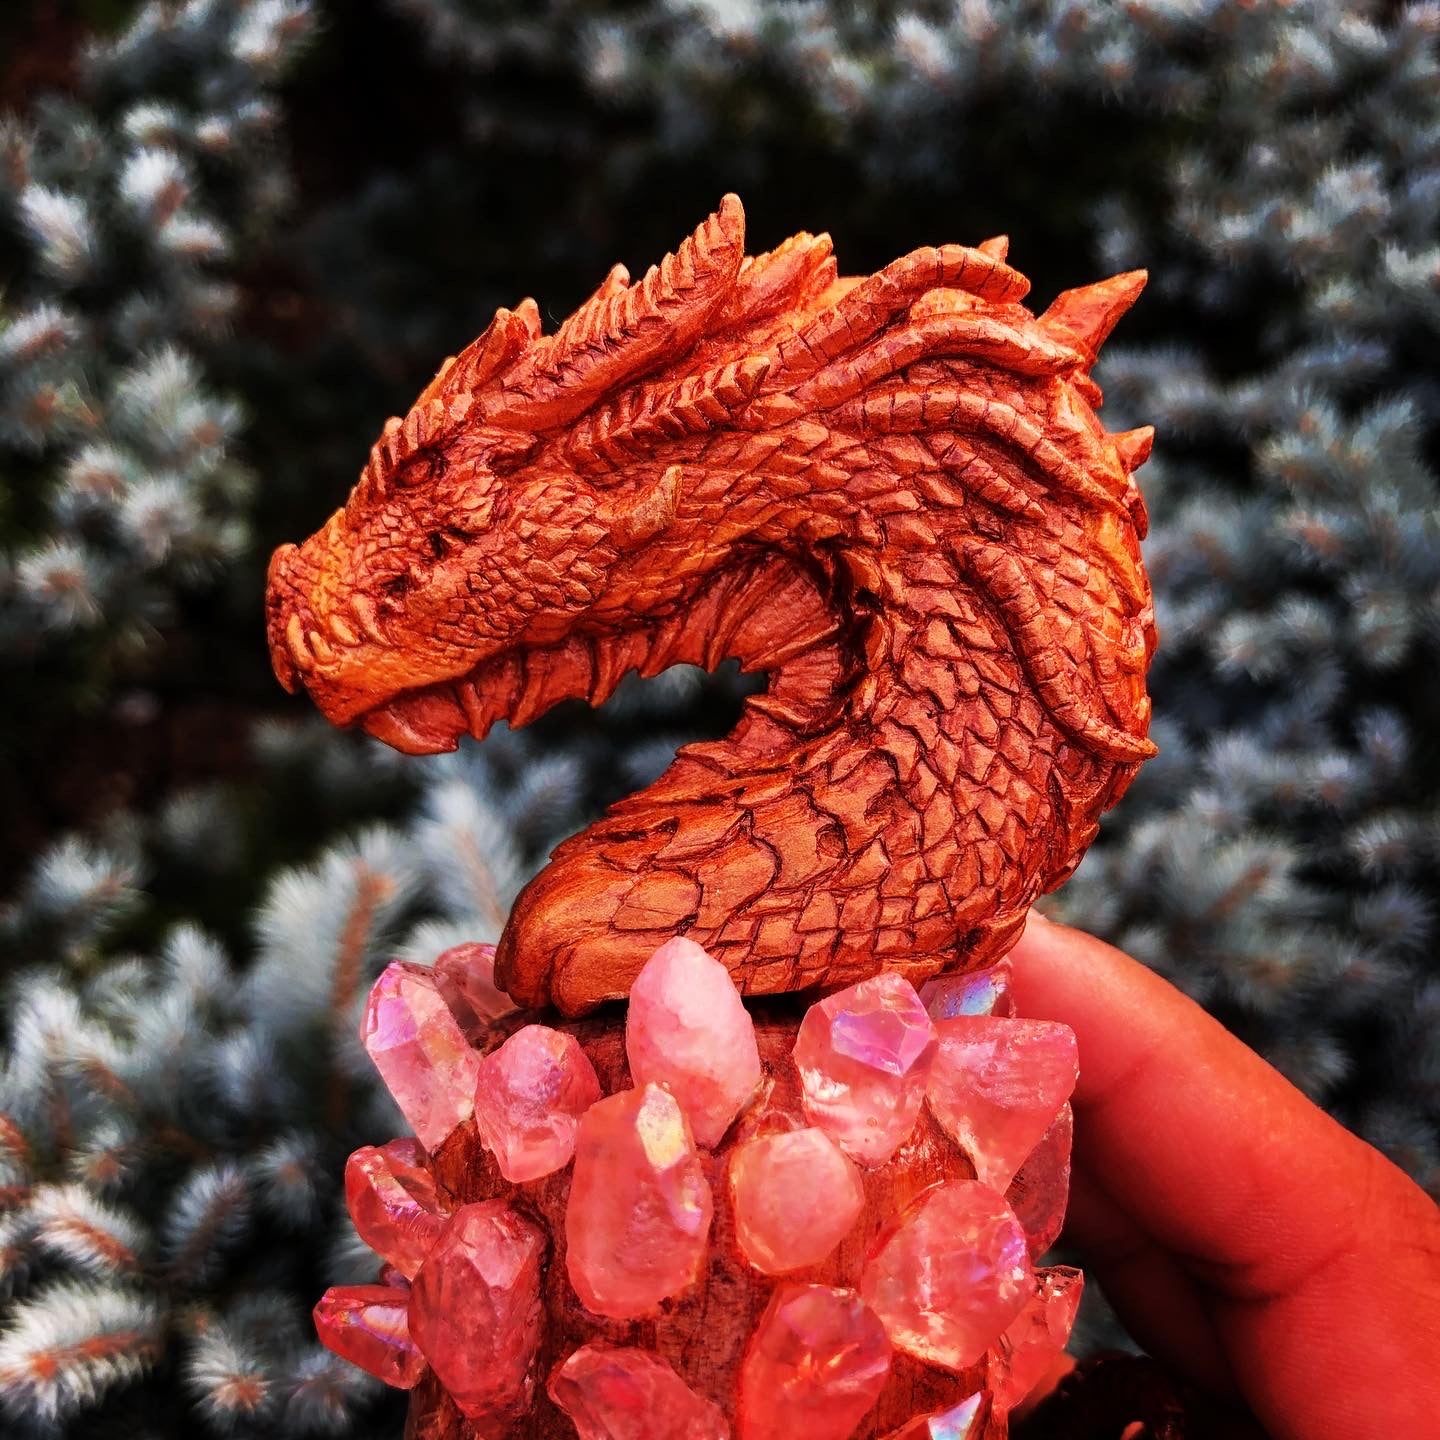 fantasy dragon concept art handmade in wood